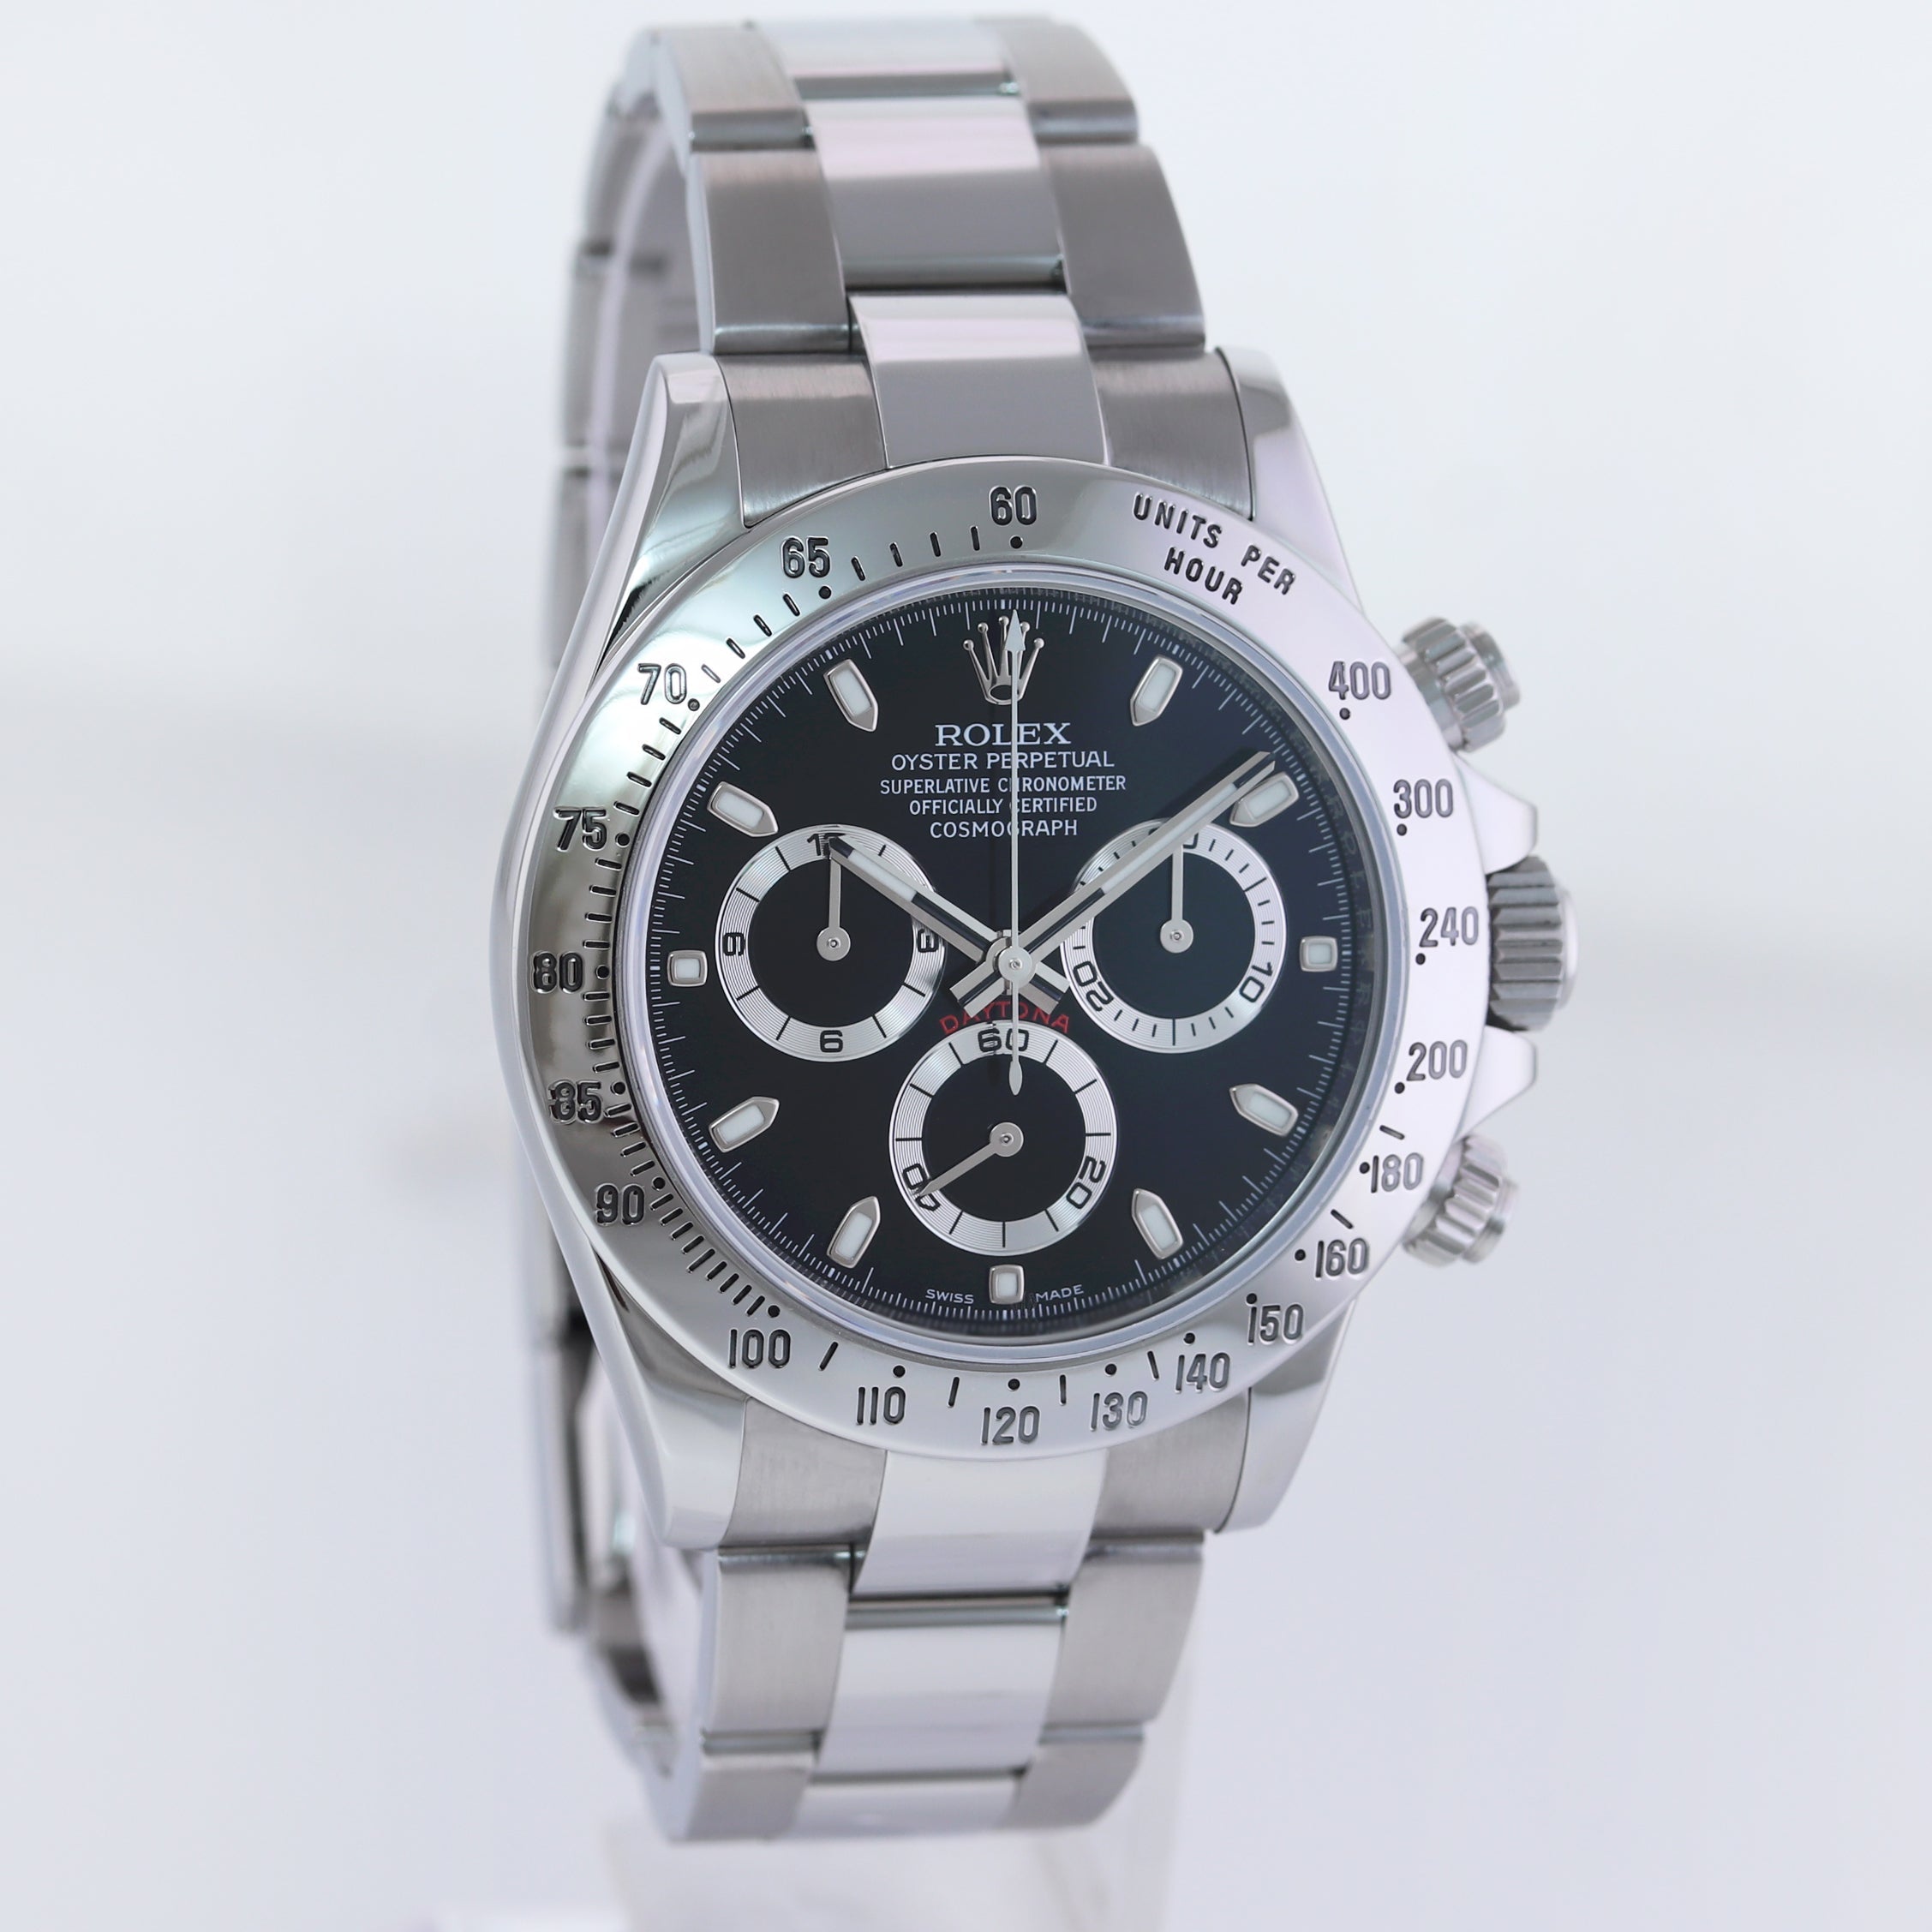 MINT 2015 PAPERS Rolex Daytona 116520 Black Chromalight Steel Chrono 40mm Watch